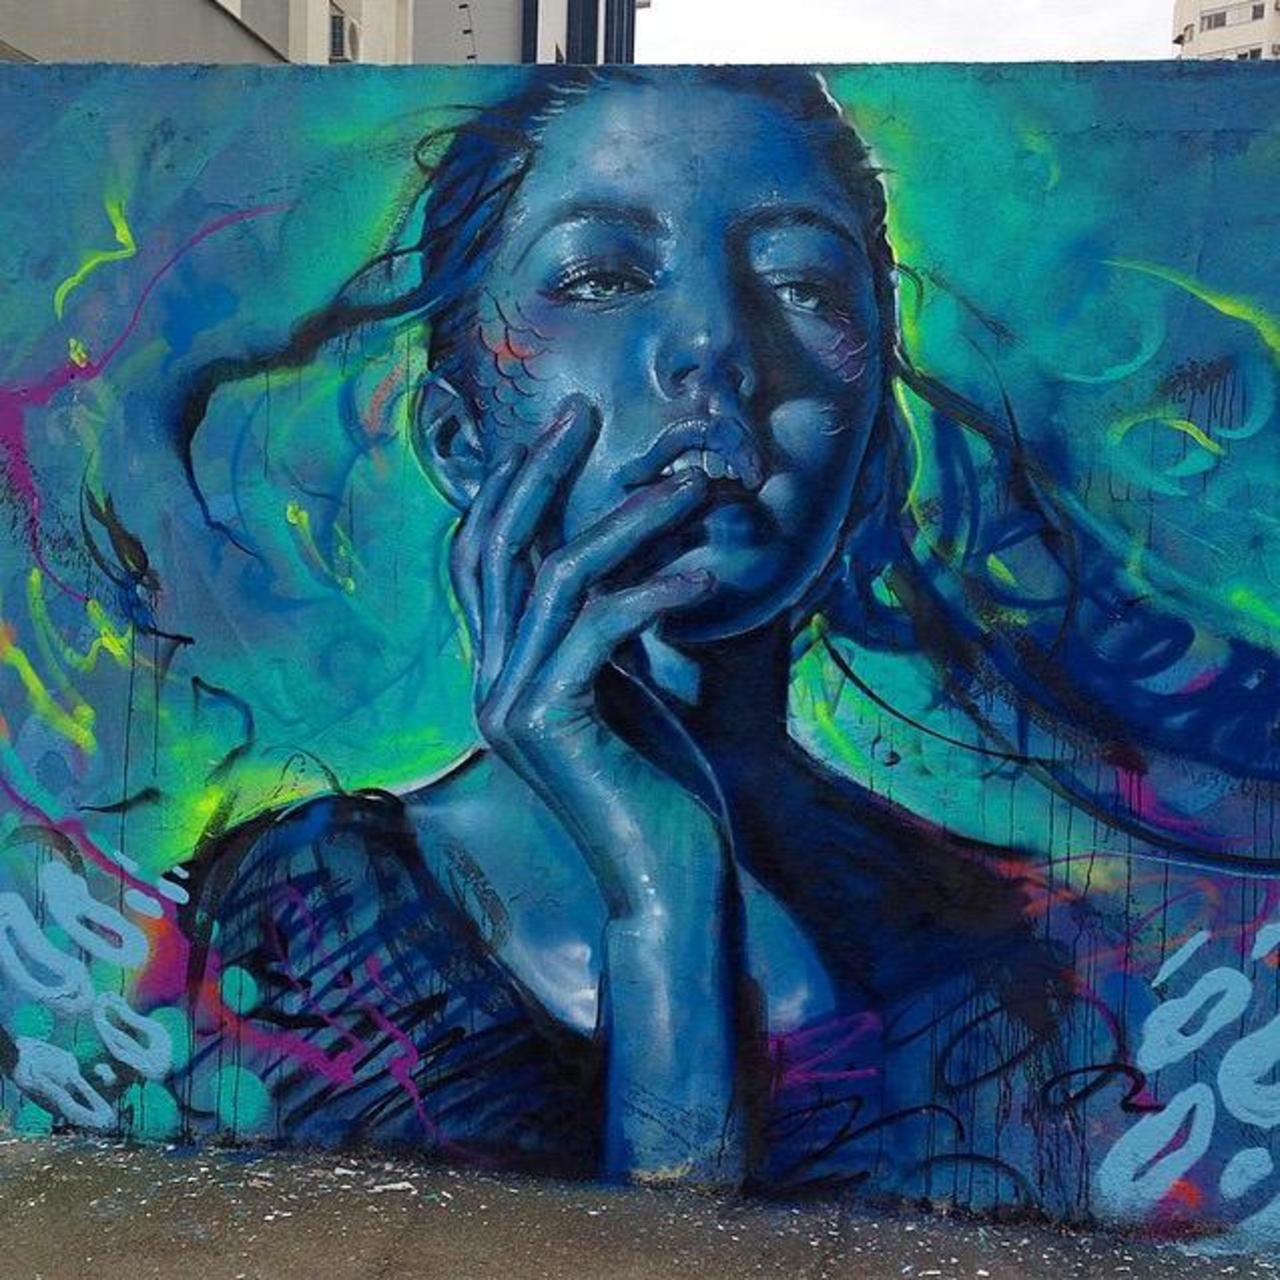 Thiago Valdi new Street Art piece titled 'Day Dreamer'

#art #mural #graffiti #streetart http://t.co/NoQYr97iph